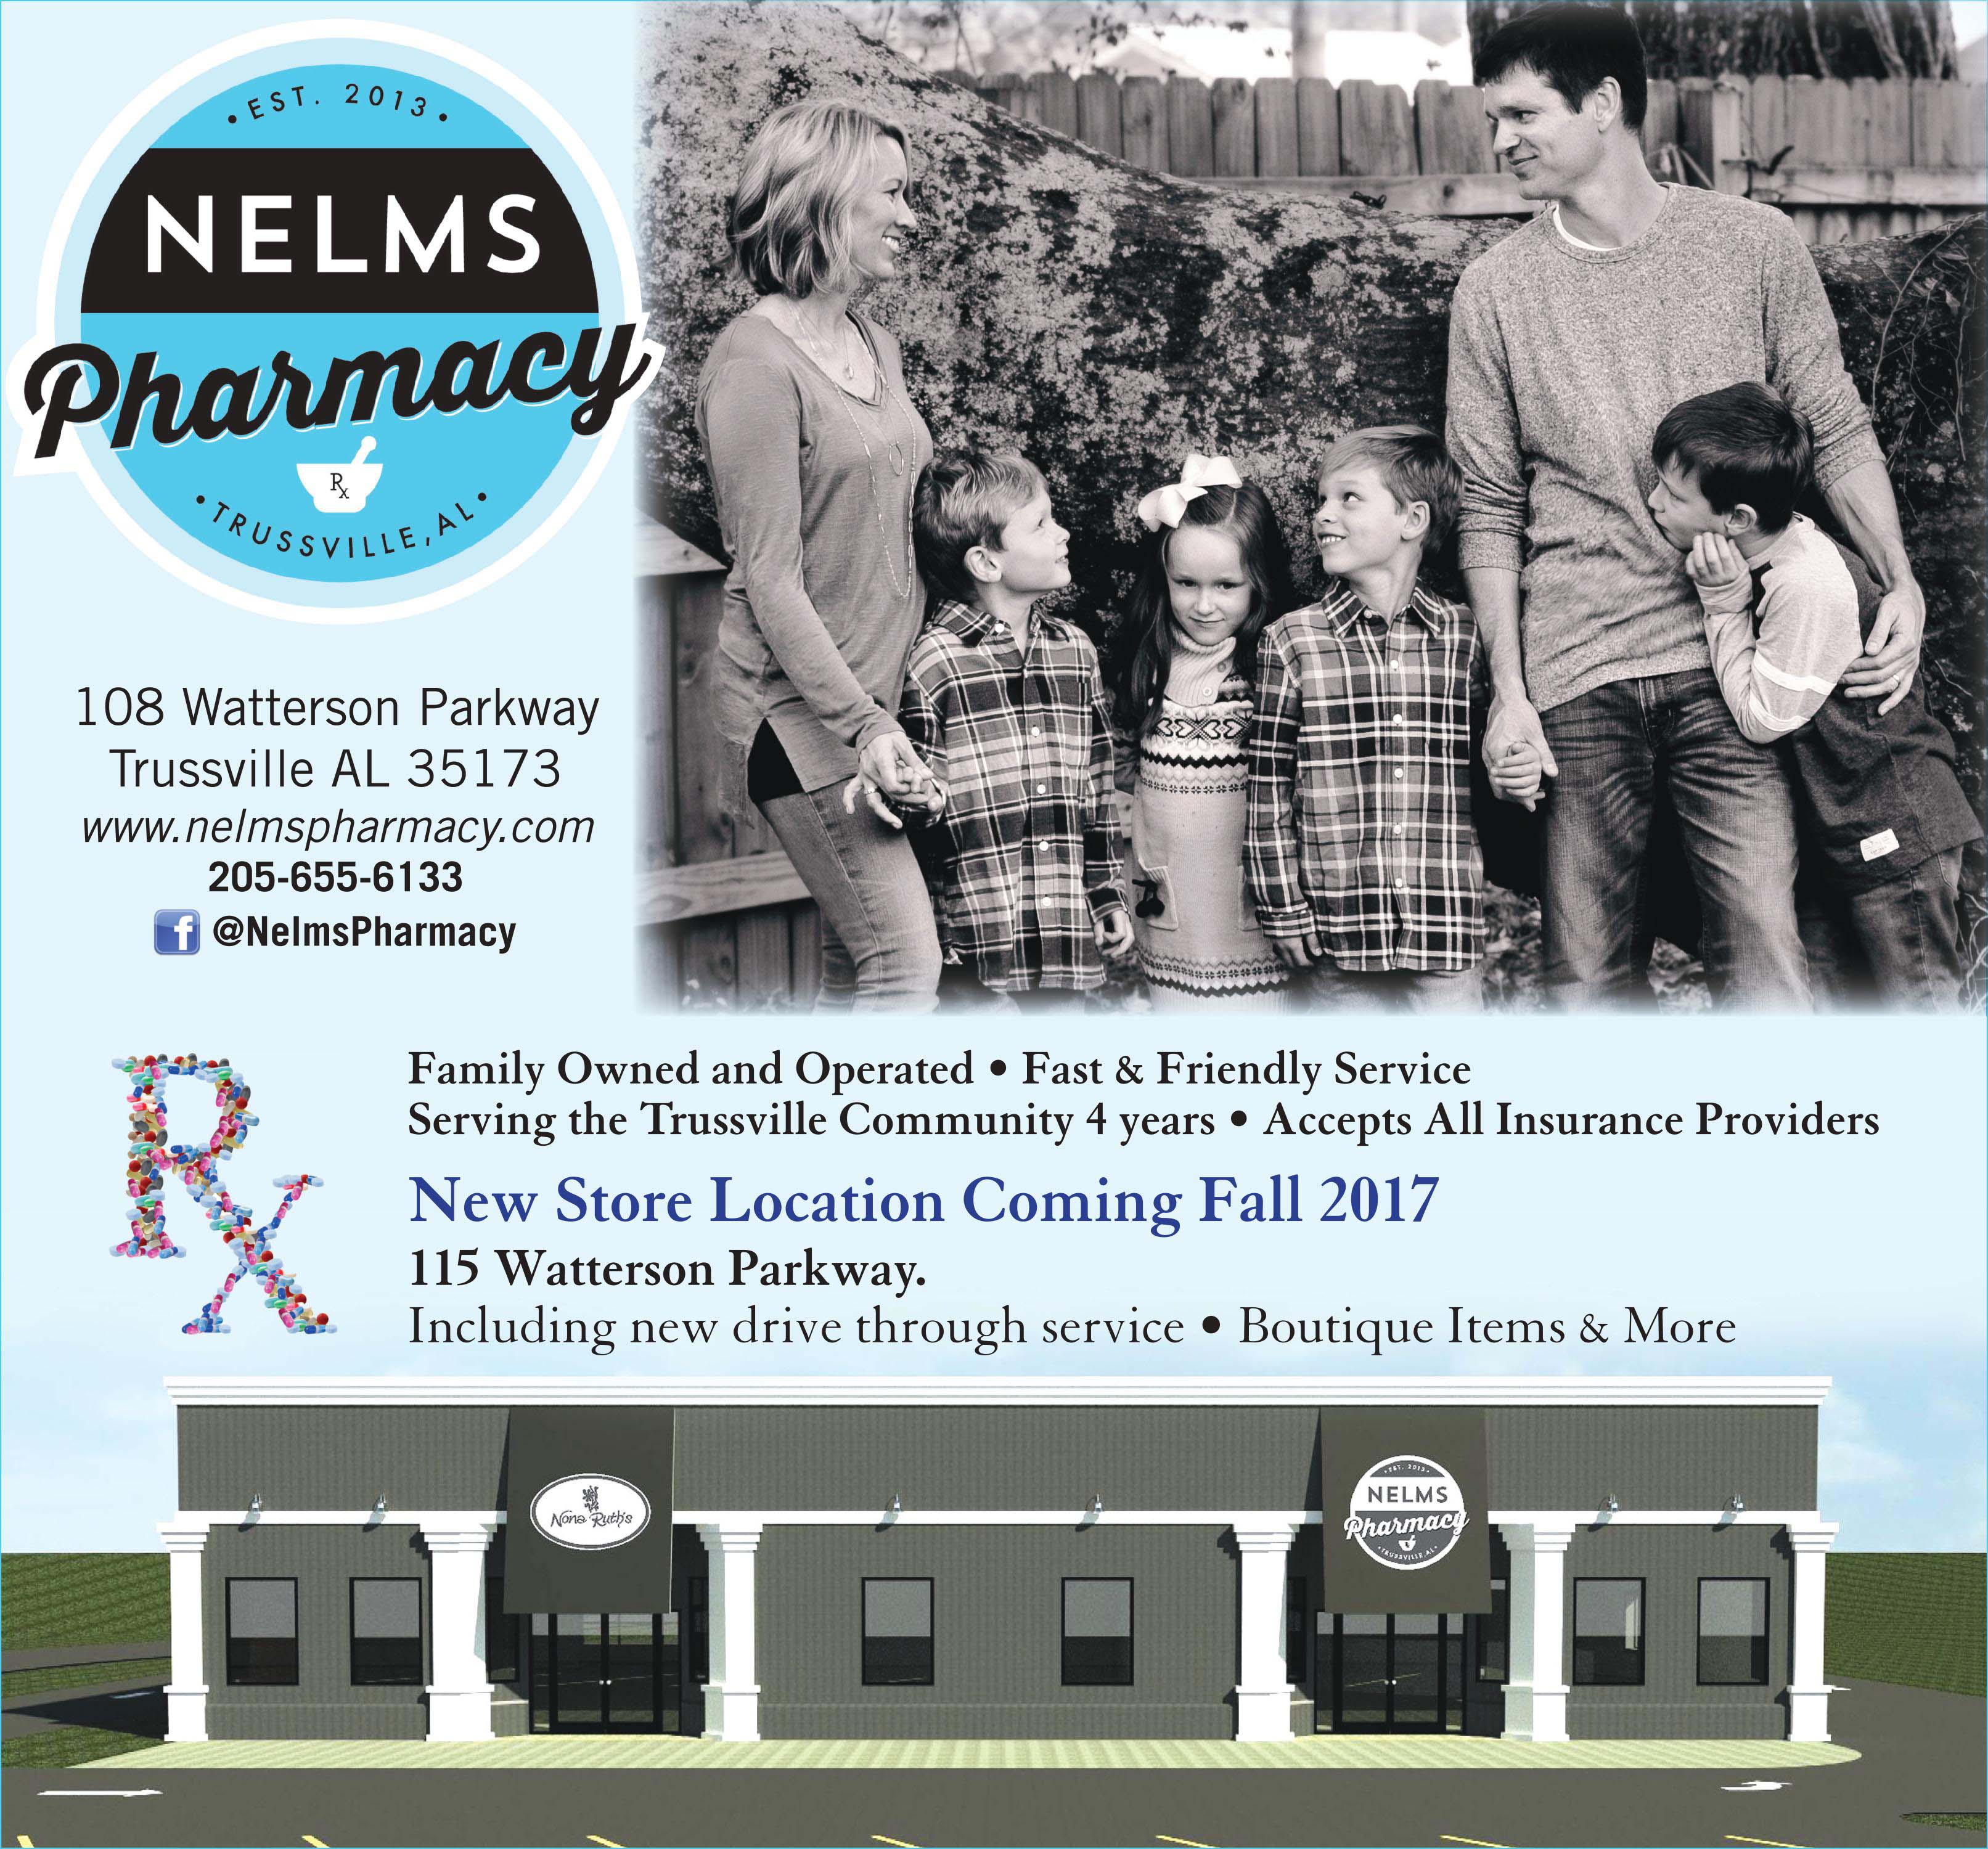 Friendly service prescribed at Nelms Pharmacy